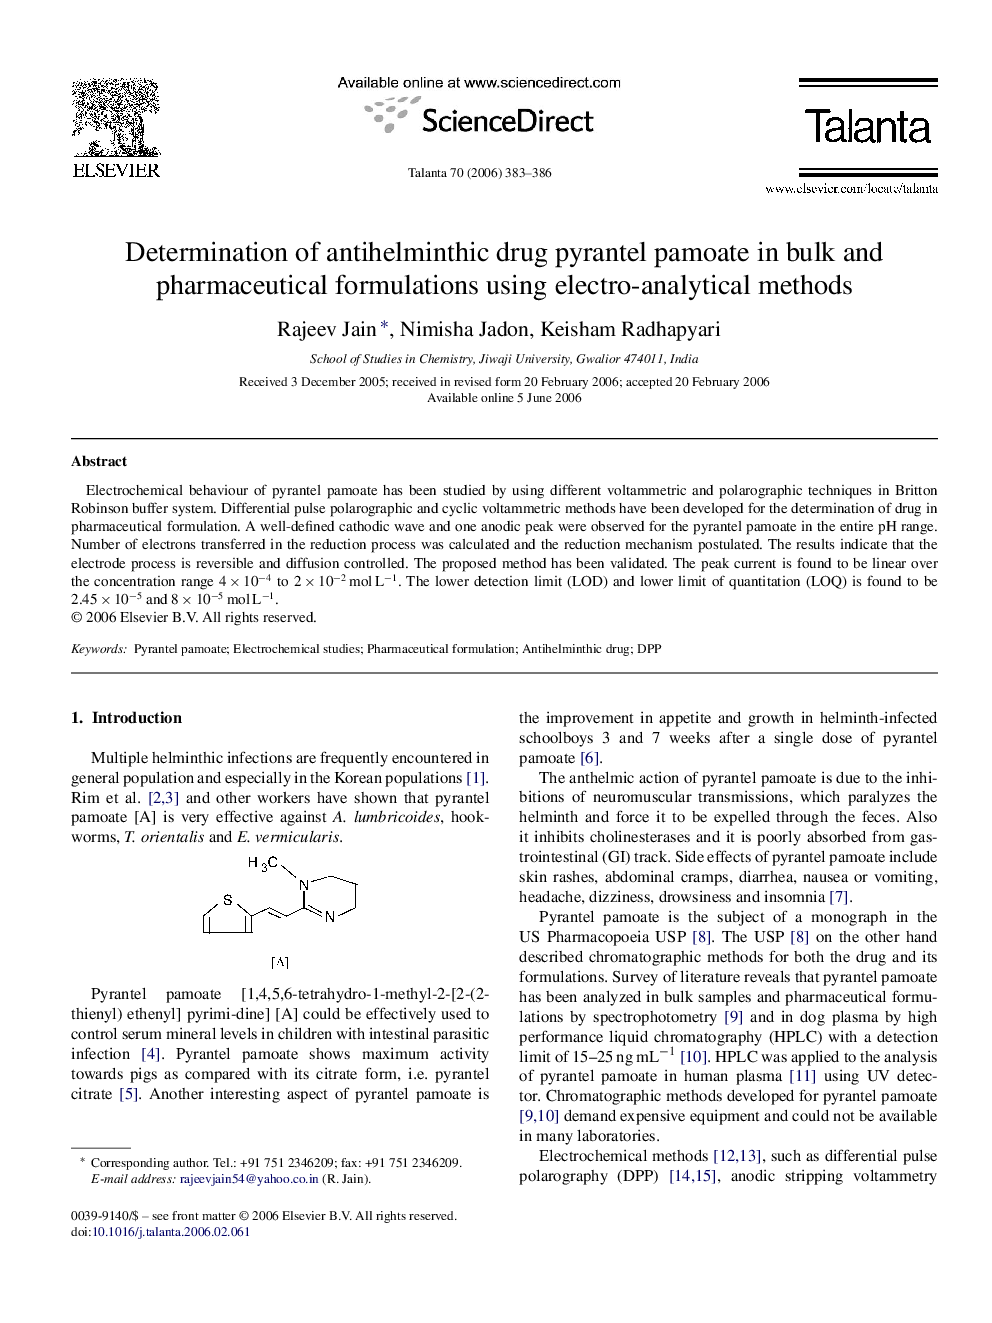 Determination of antihelminthic drug pyrantel pamoate in bulk and pharmaceutical formulations using electro-analytical methods